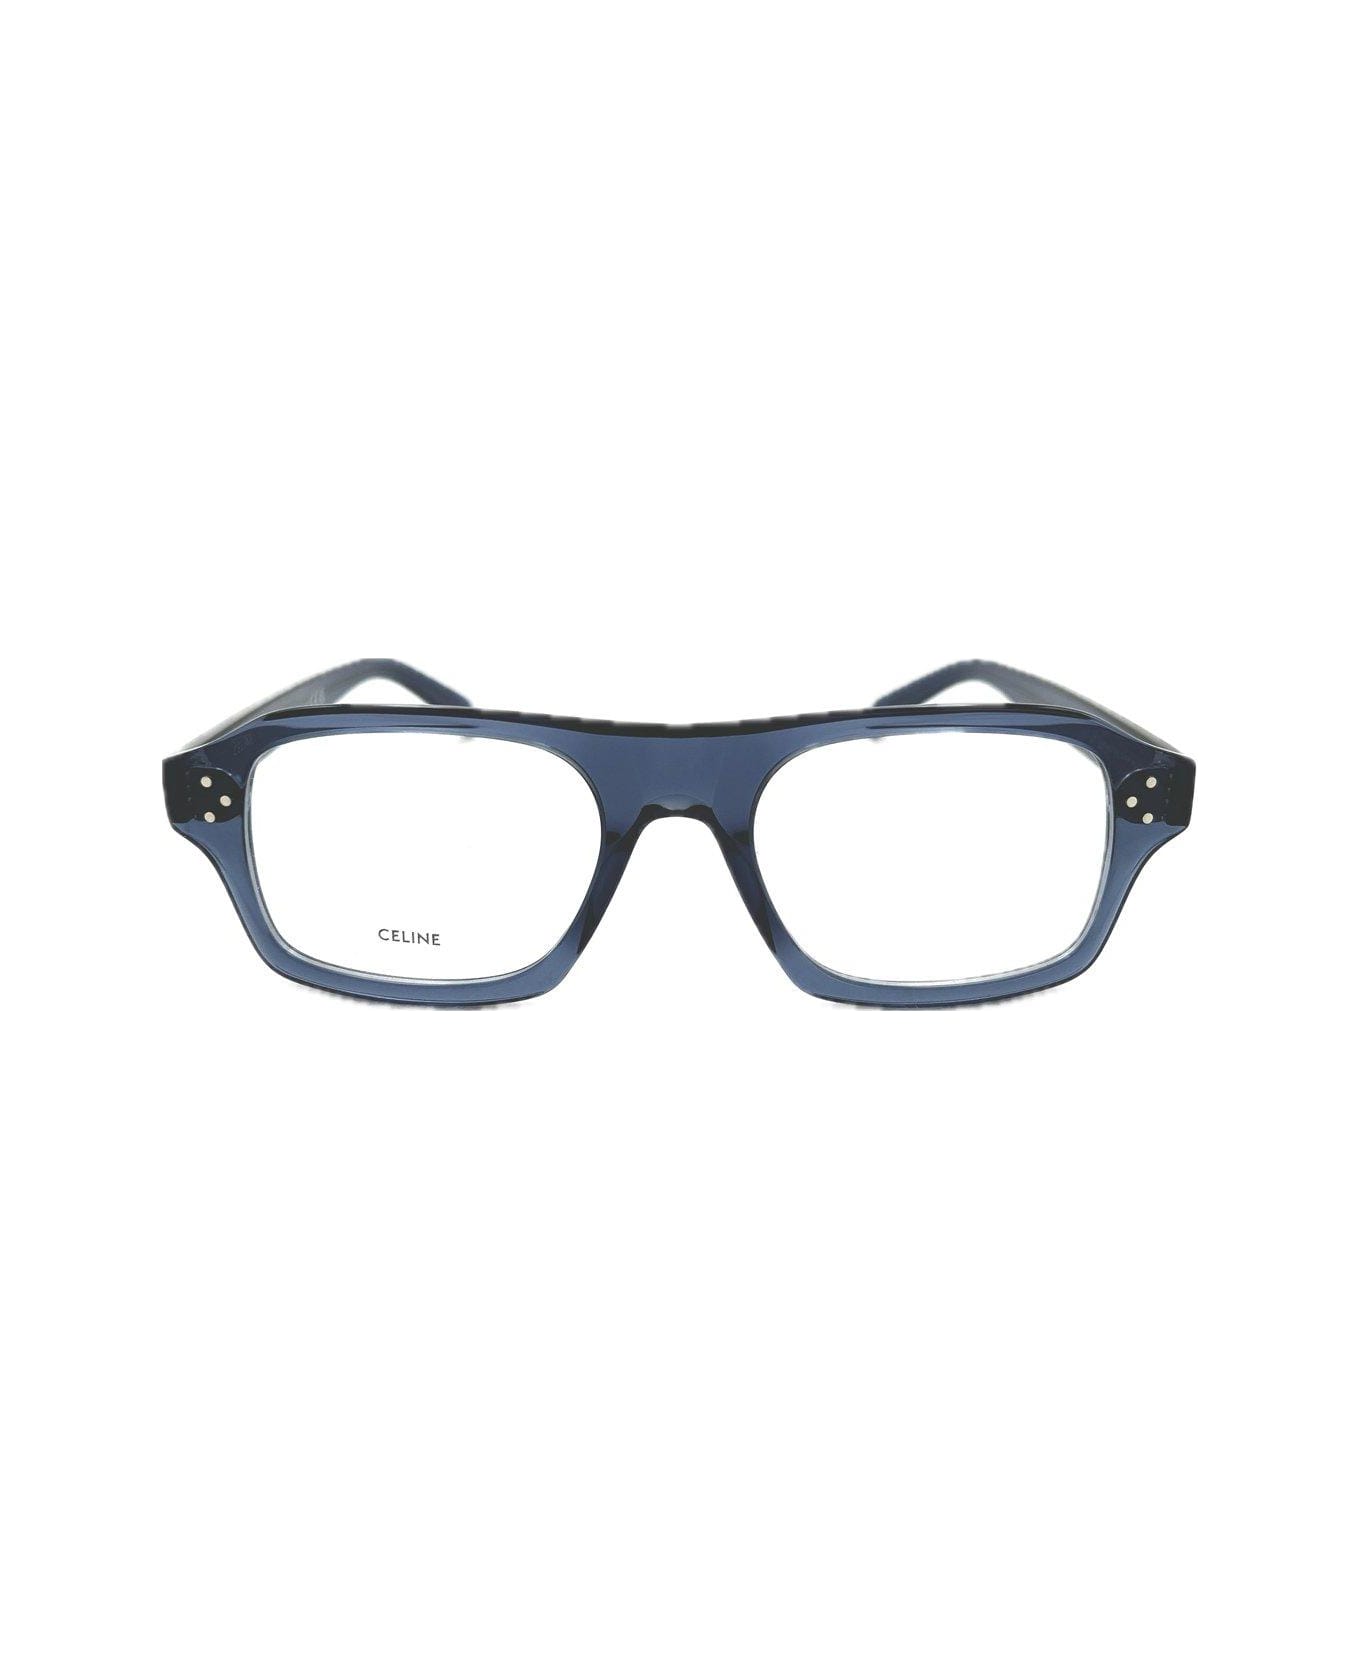 Celine Square Framed Glasses - 090